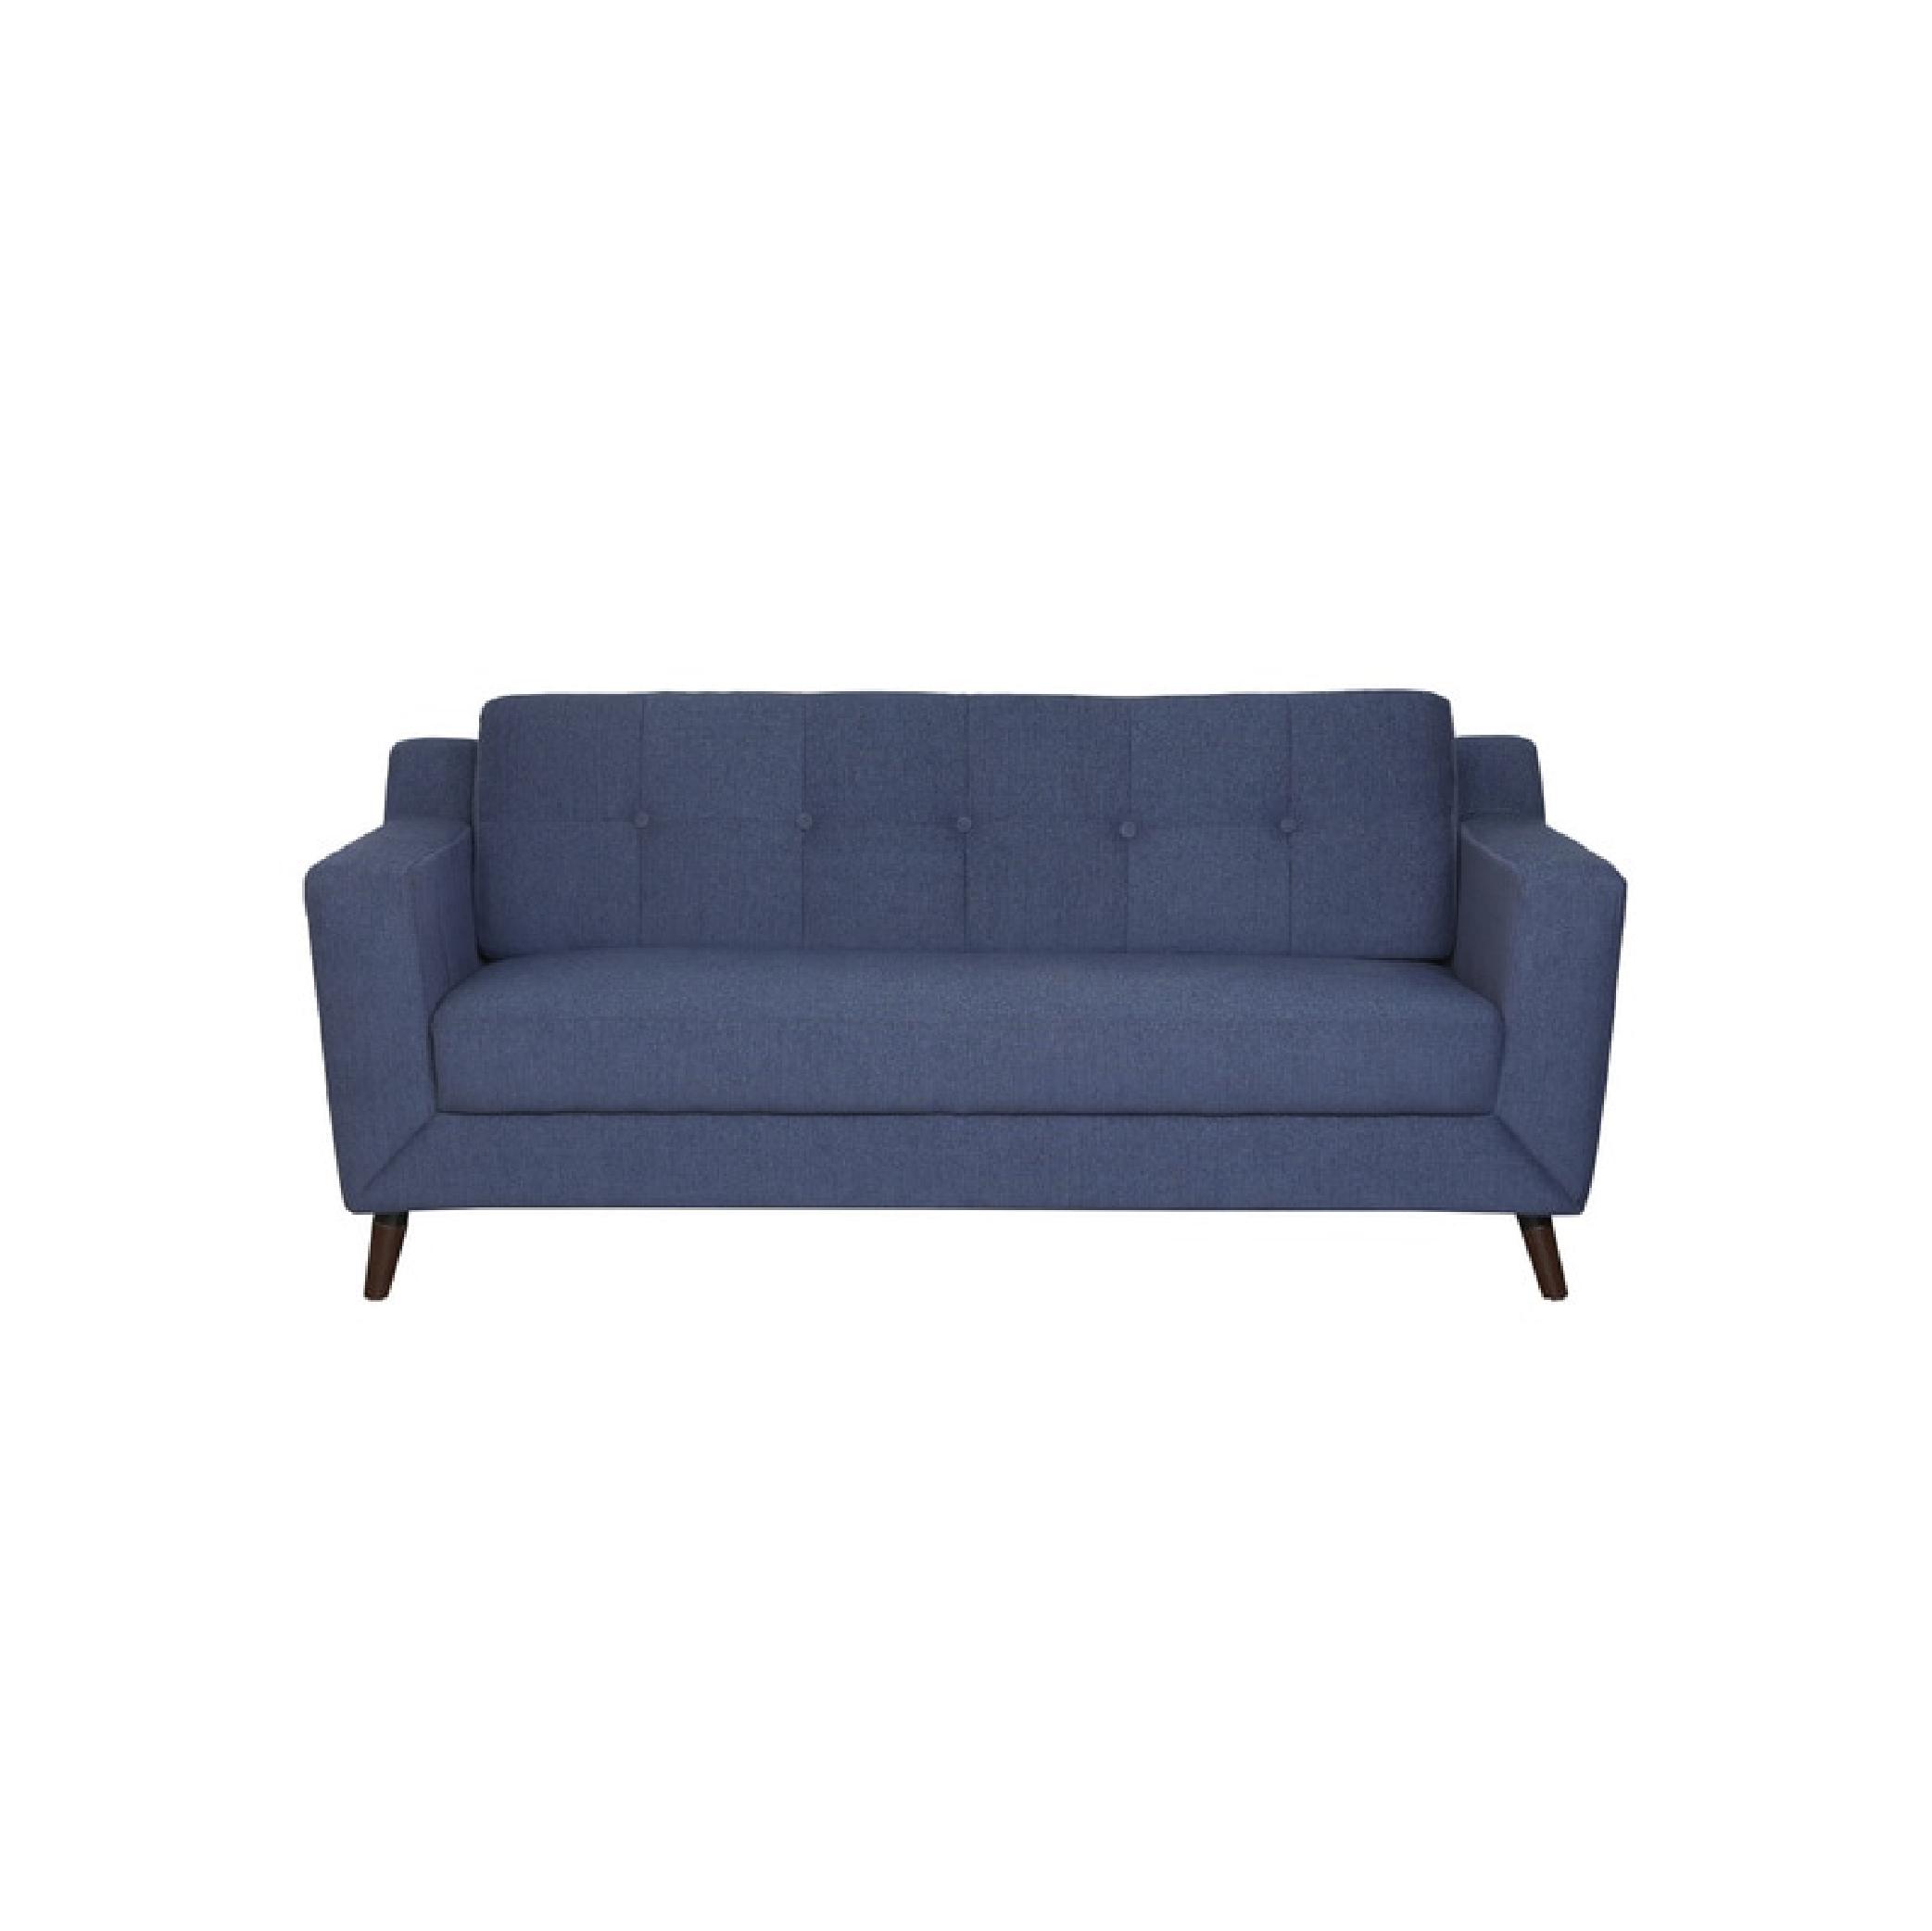 Nocera Three Seater Sofa in Navy Blue Colour